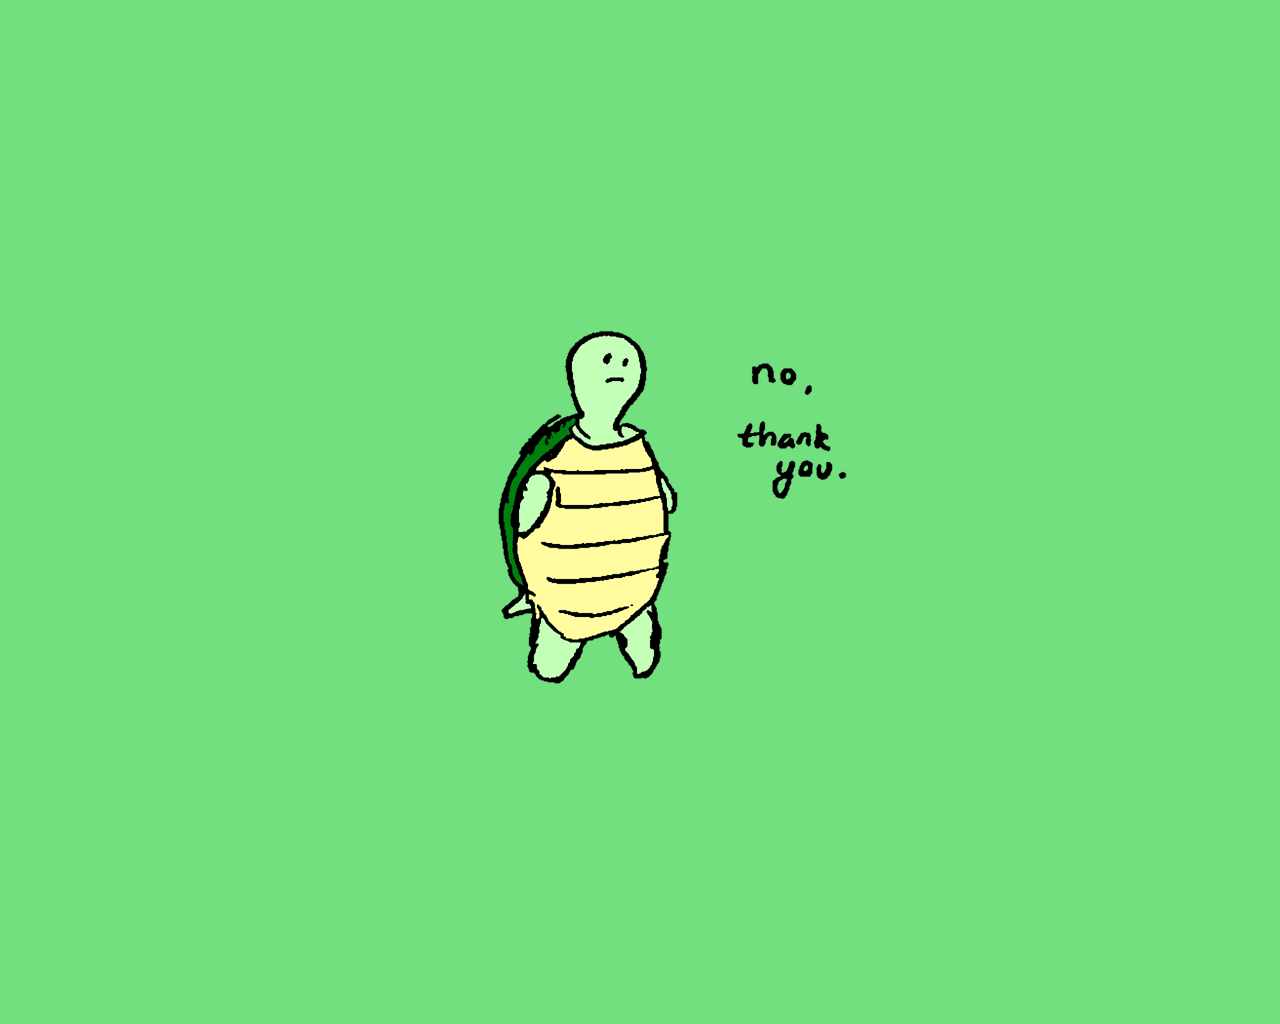 The Polite Turtle